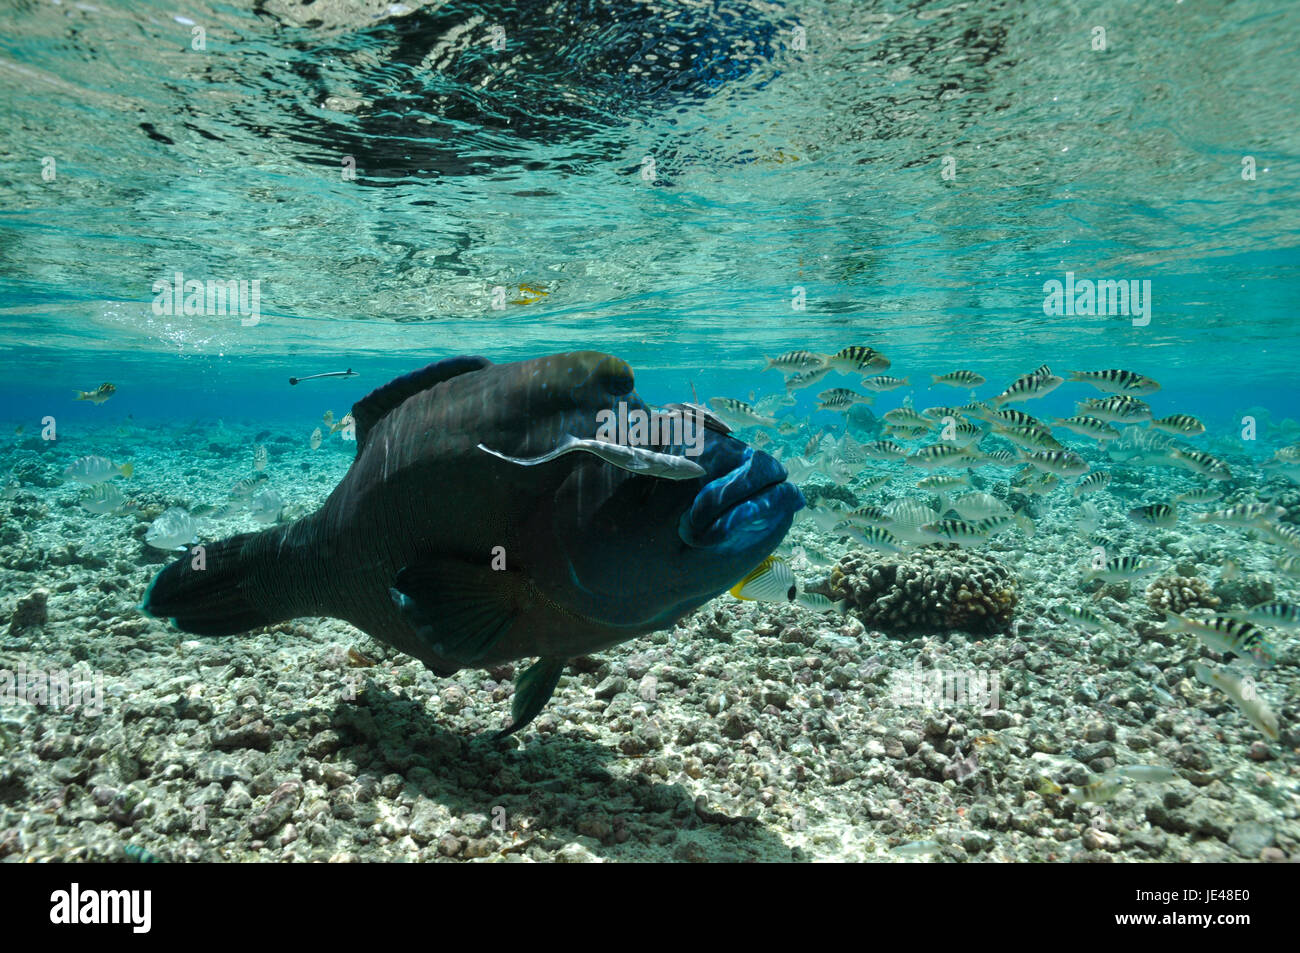 napoleon fish in shallow water Stock Photo